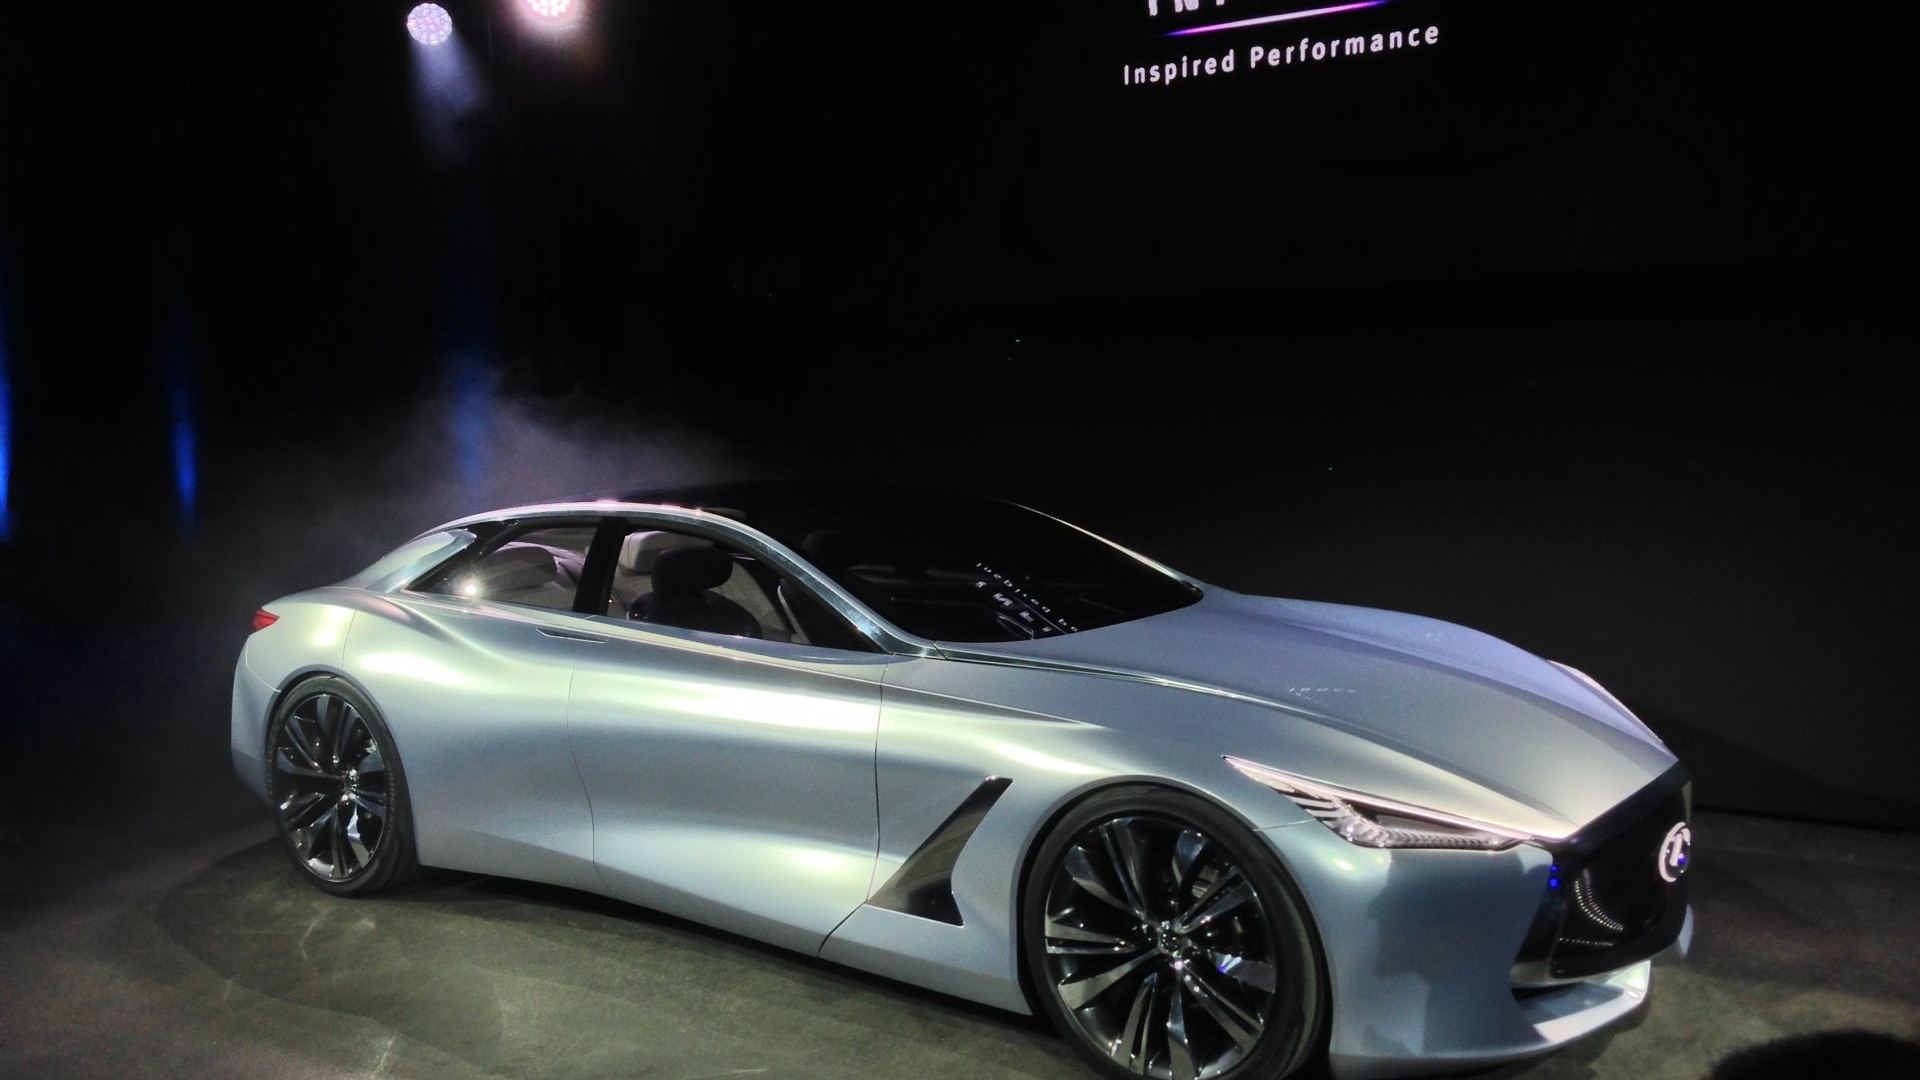 2015 Infiniti Q80 Inspiration Concept  -  Paris Auto Show (private event)